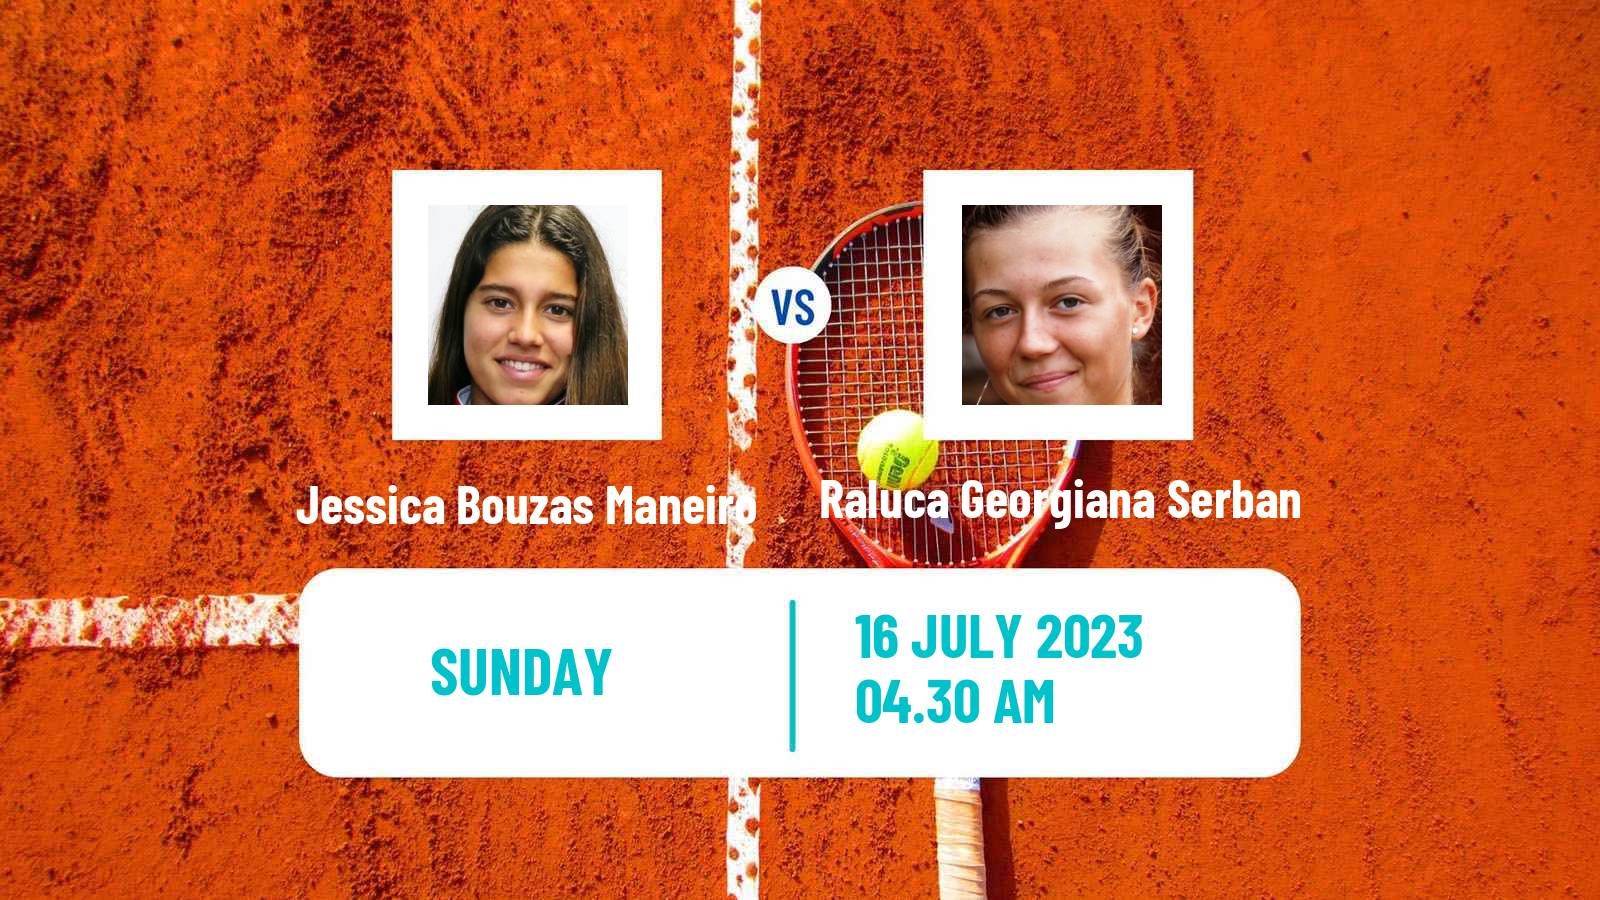 Tennis ITF W60 Rome 2 Women Jessica Bouzas Maneiro - Raluca Georgiana Serban